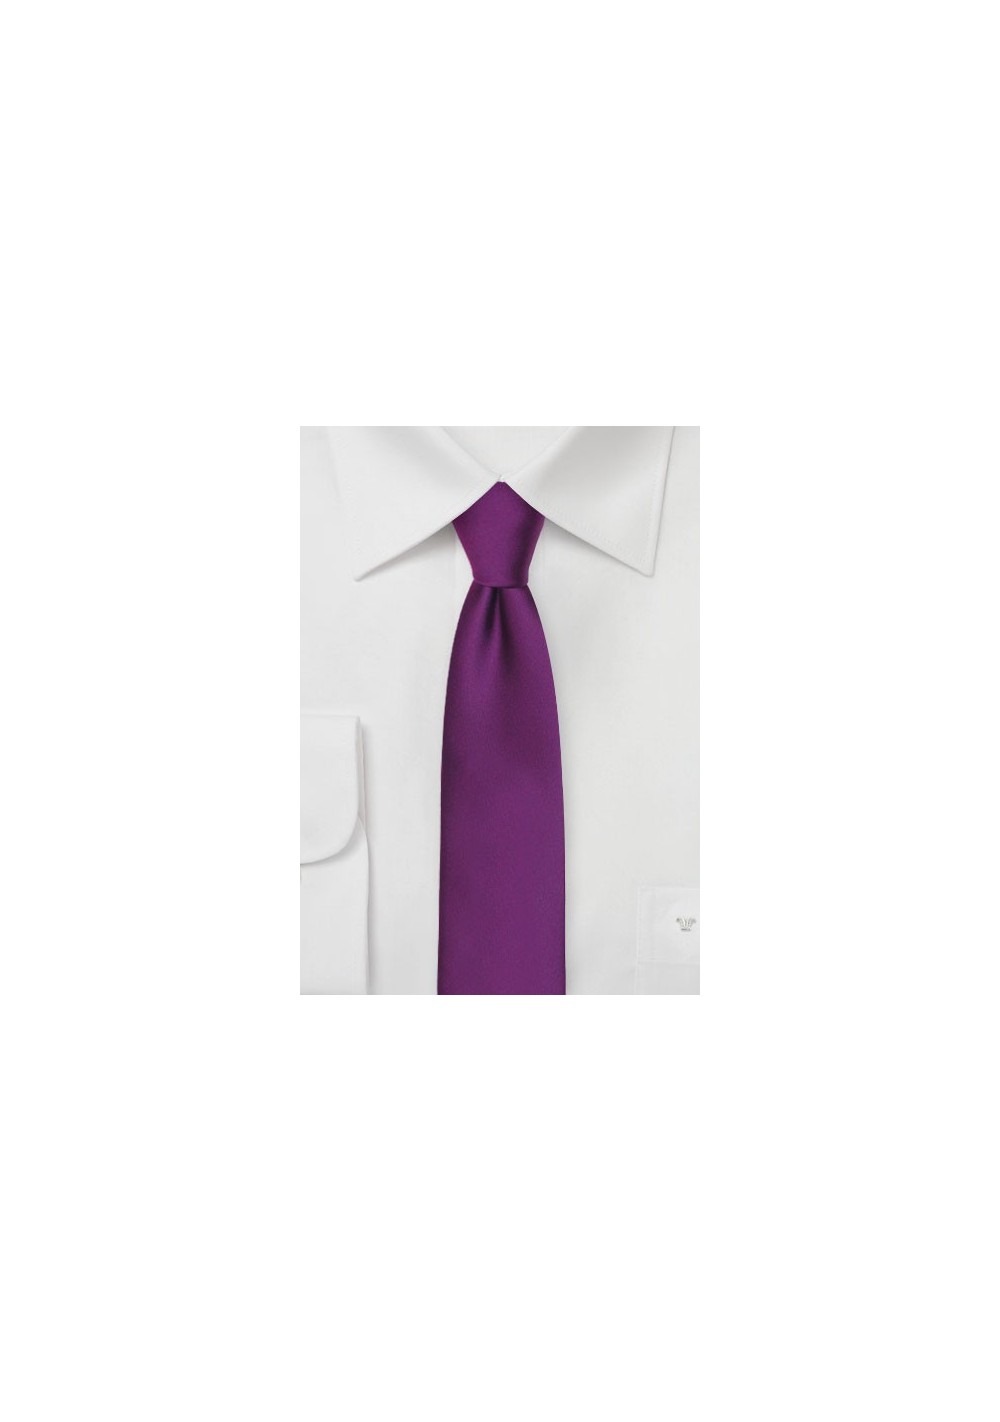 Solid Skinny Tie in Bright Purple